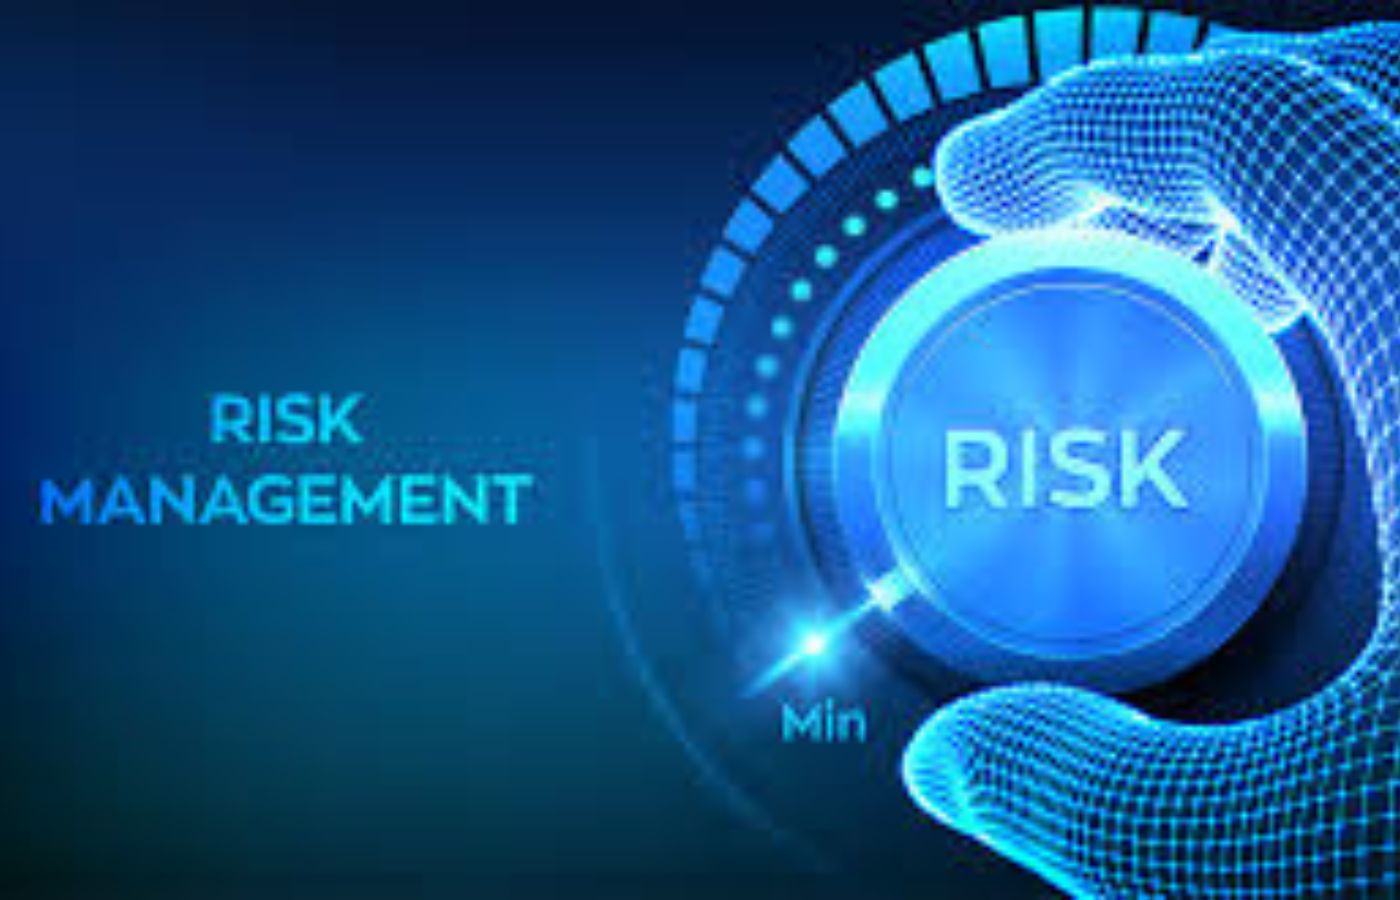 illustrative image representative of risk management